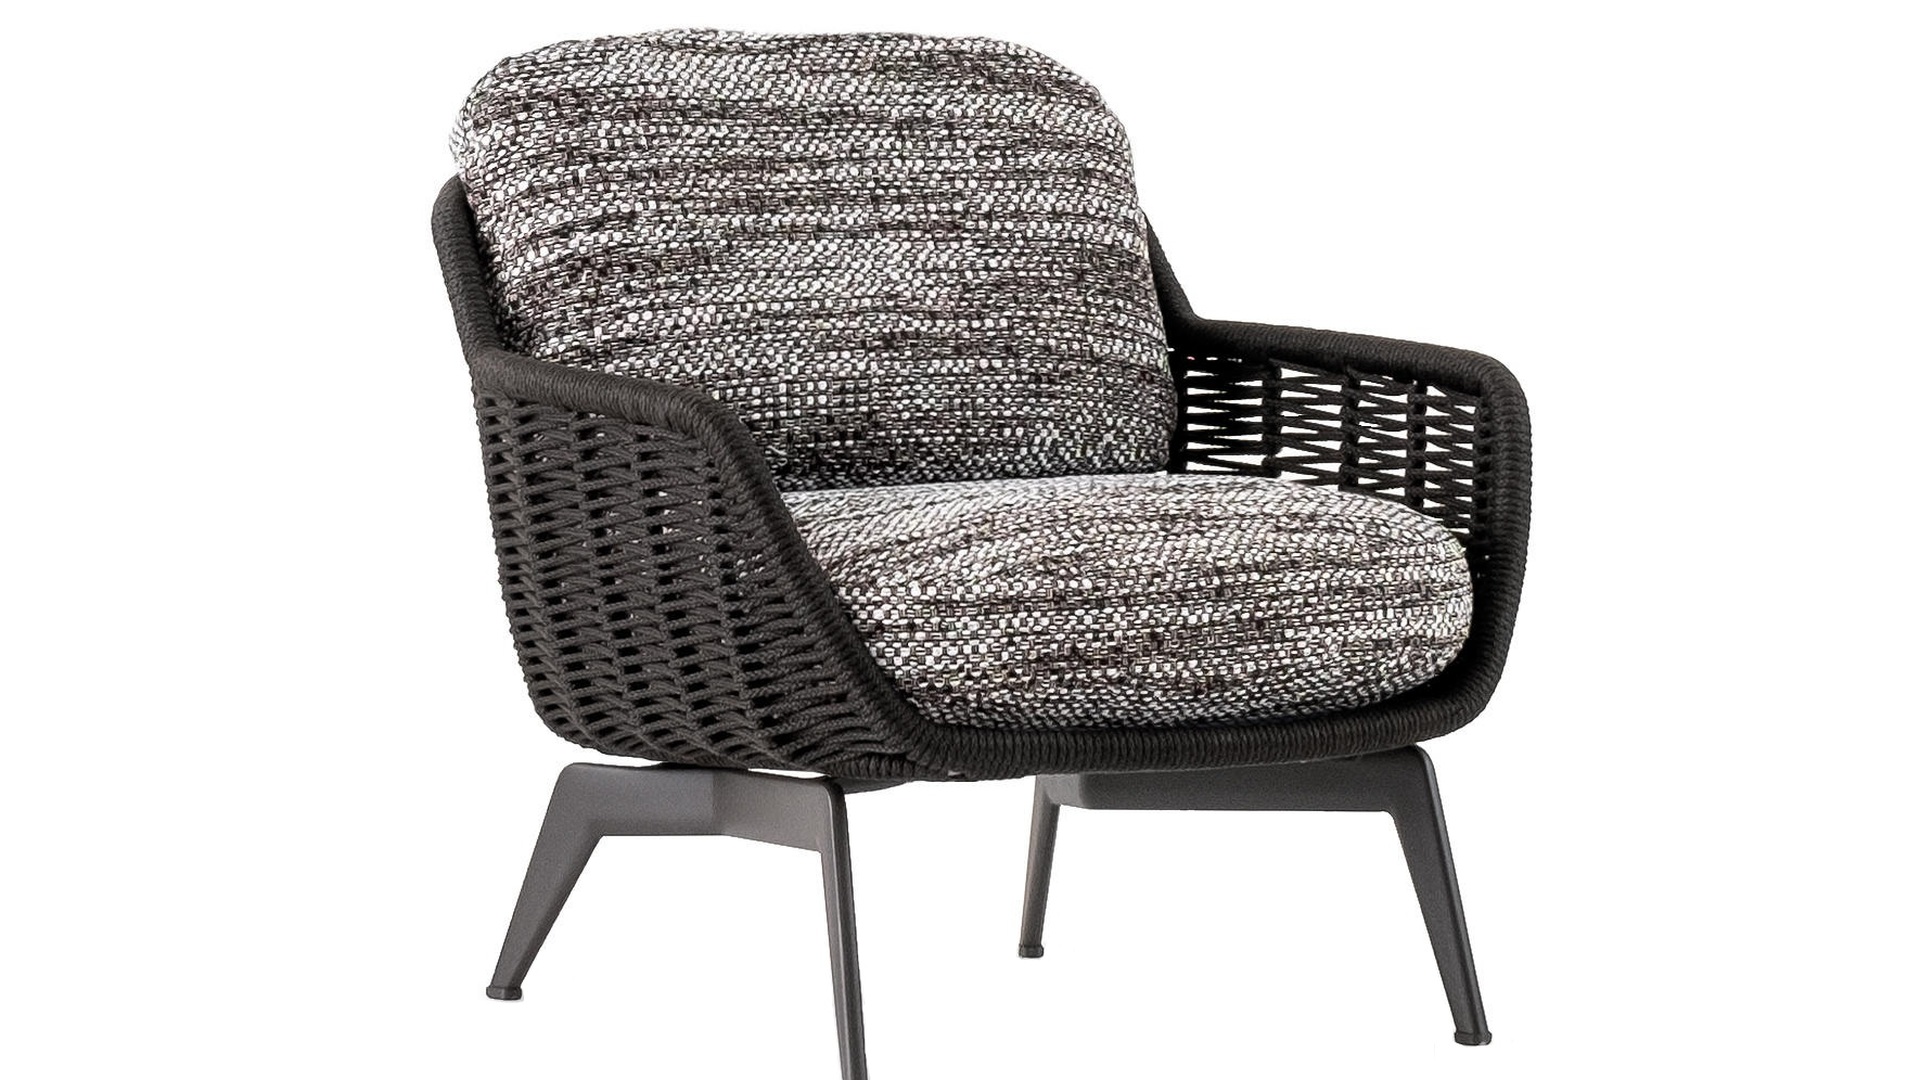 HORA Barneveld Minotti Belt Cord Outdoor bank sofa outdoor fauteuil armchair stoel chair 132.jpg